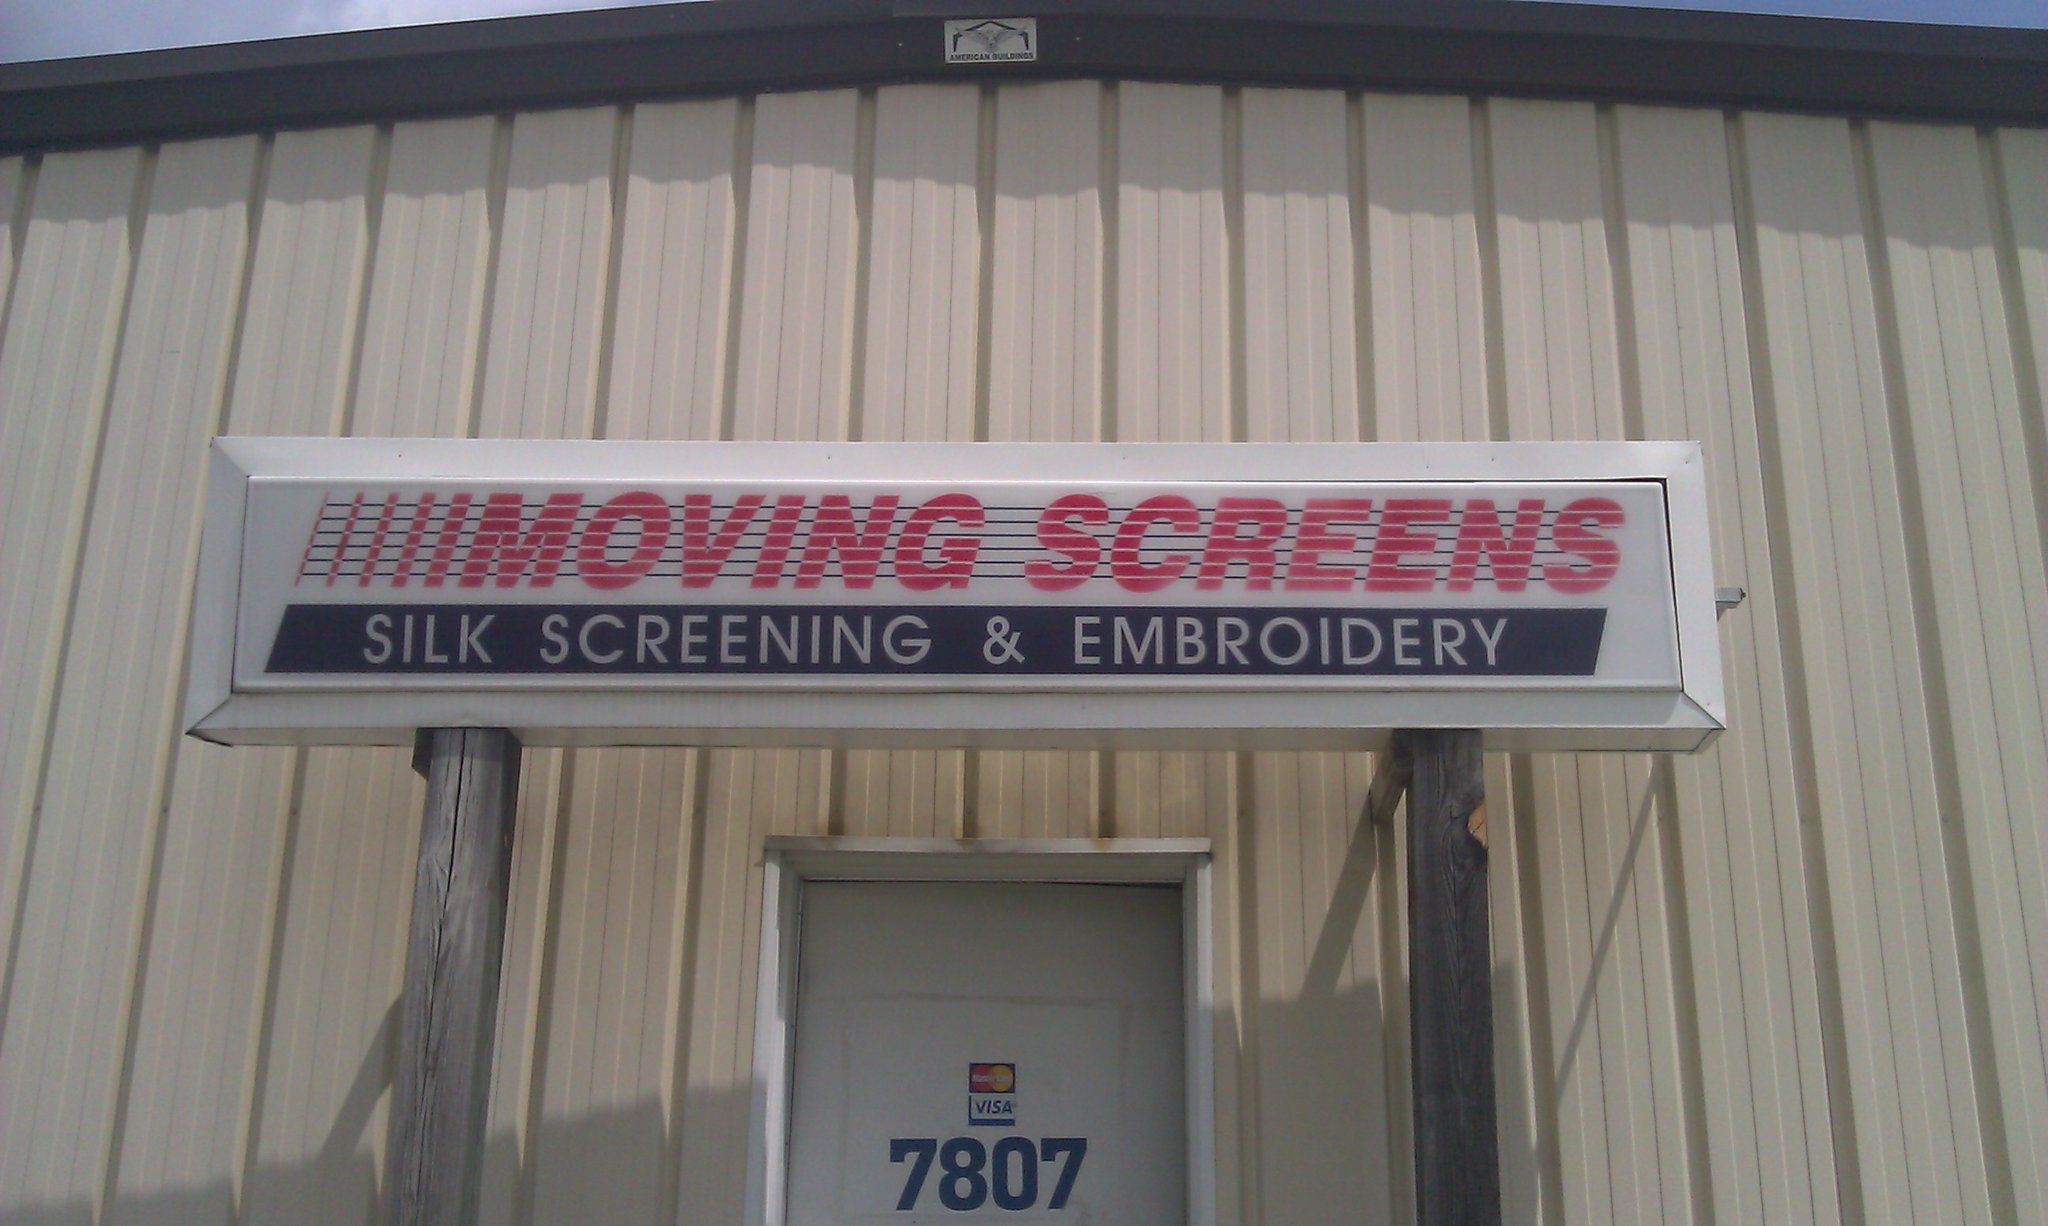 Moving Screens